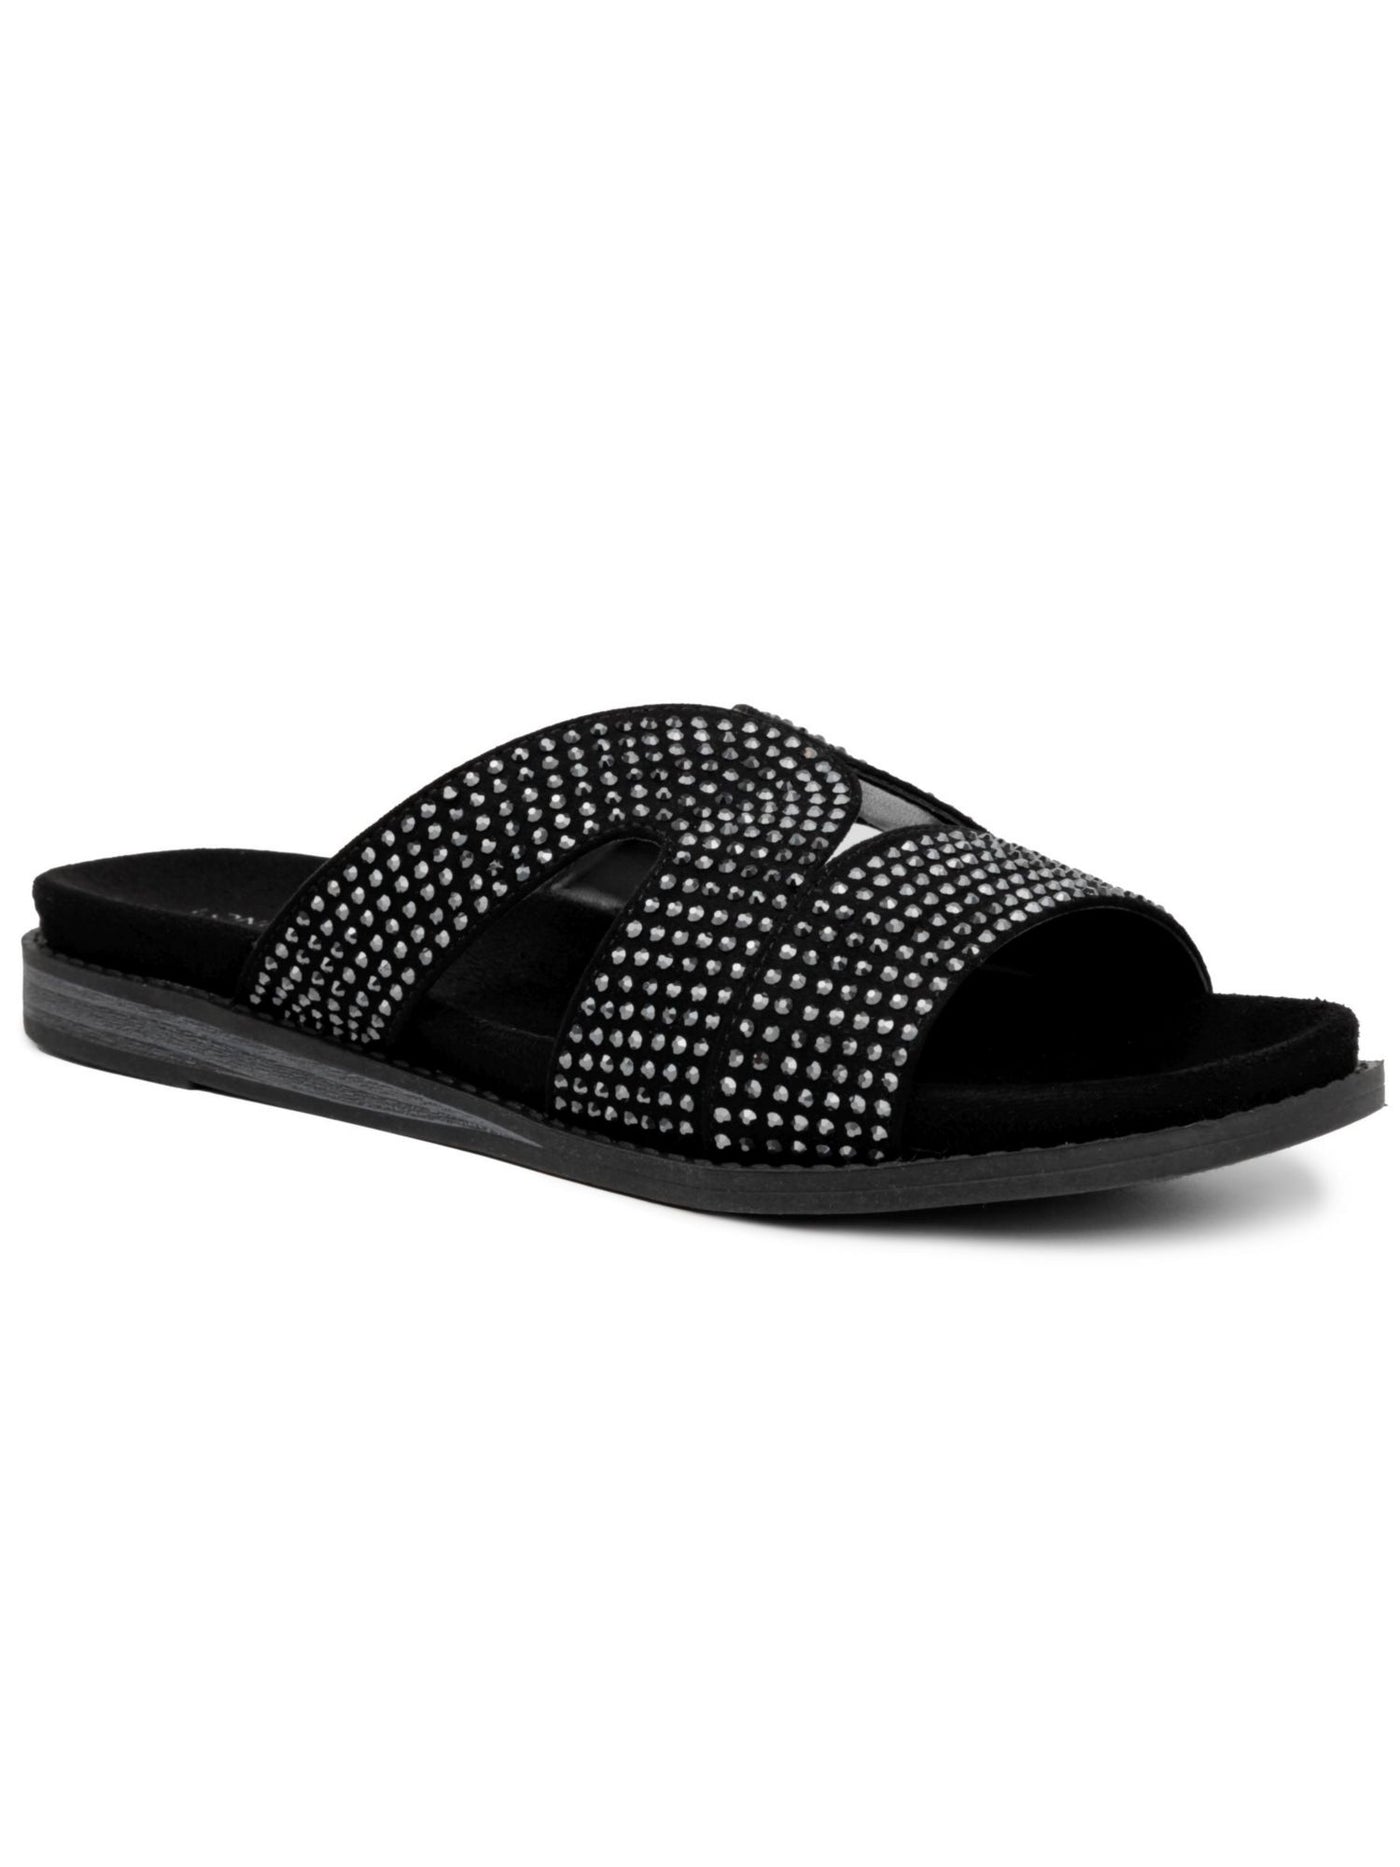 LONDON FOG COLLECTION Womens Black Studded Comfort Simone Round Toe Slip On Slide Sandals Shoes 7 M